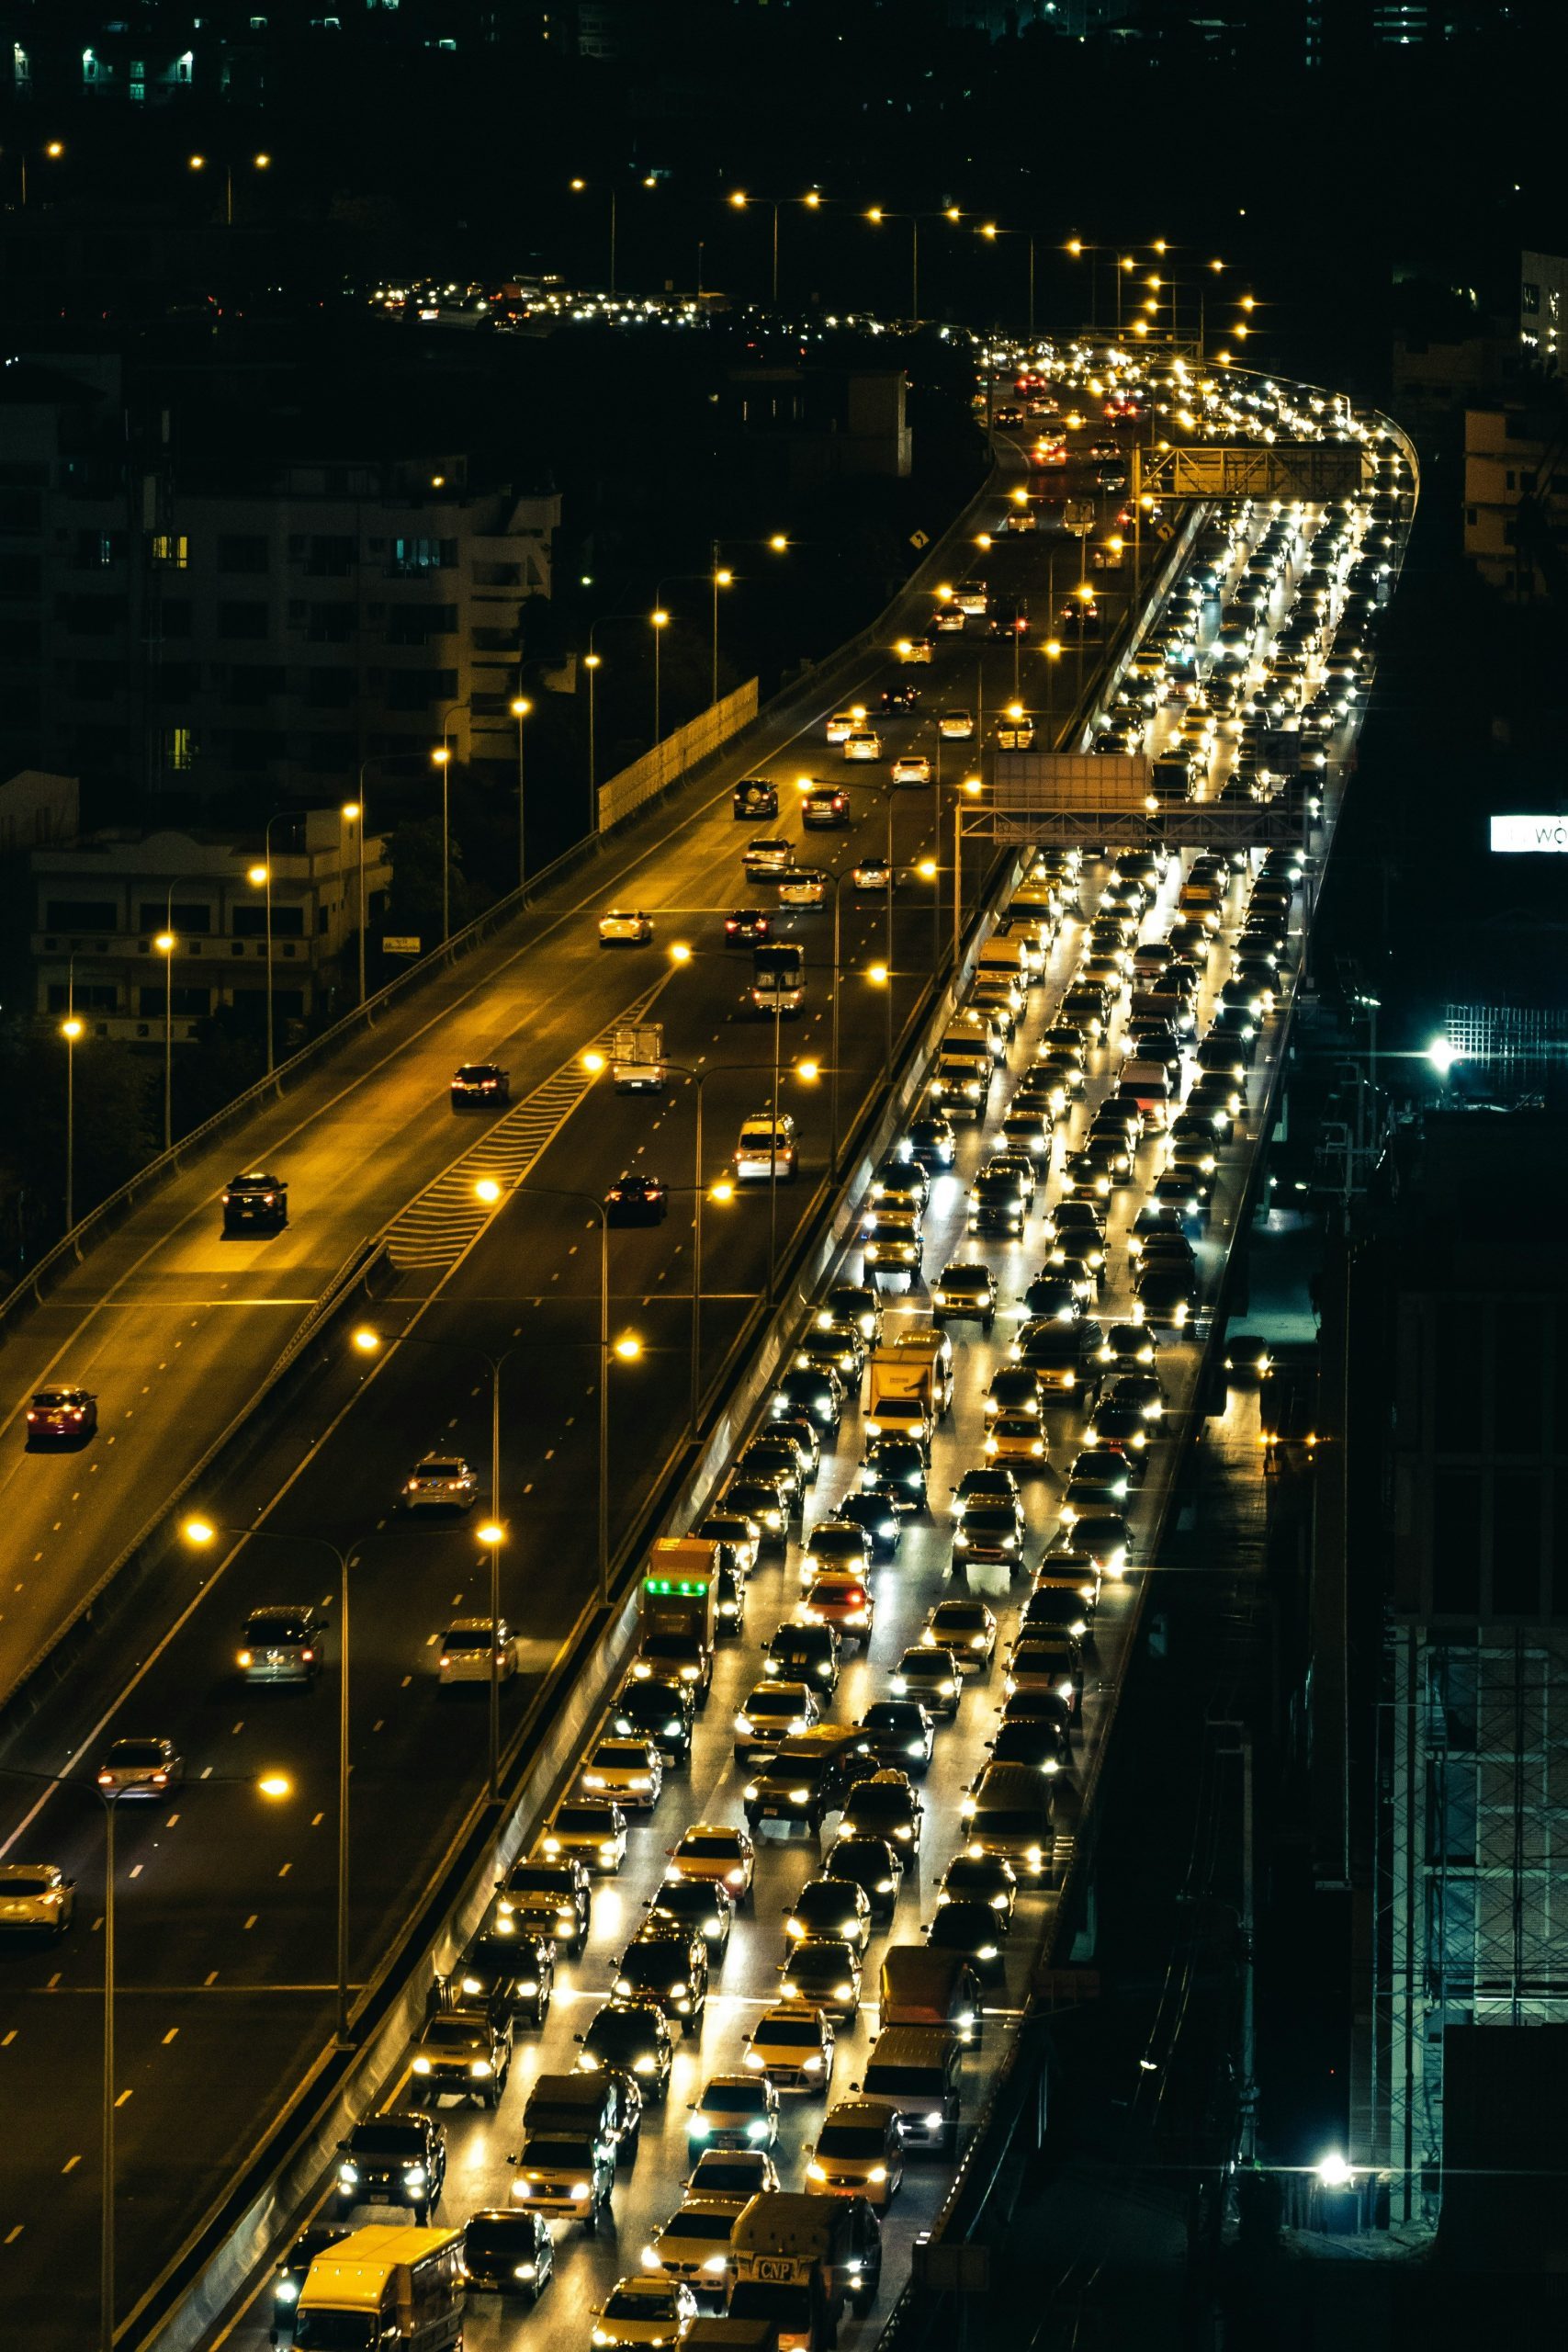 A traffic jam